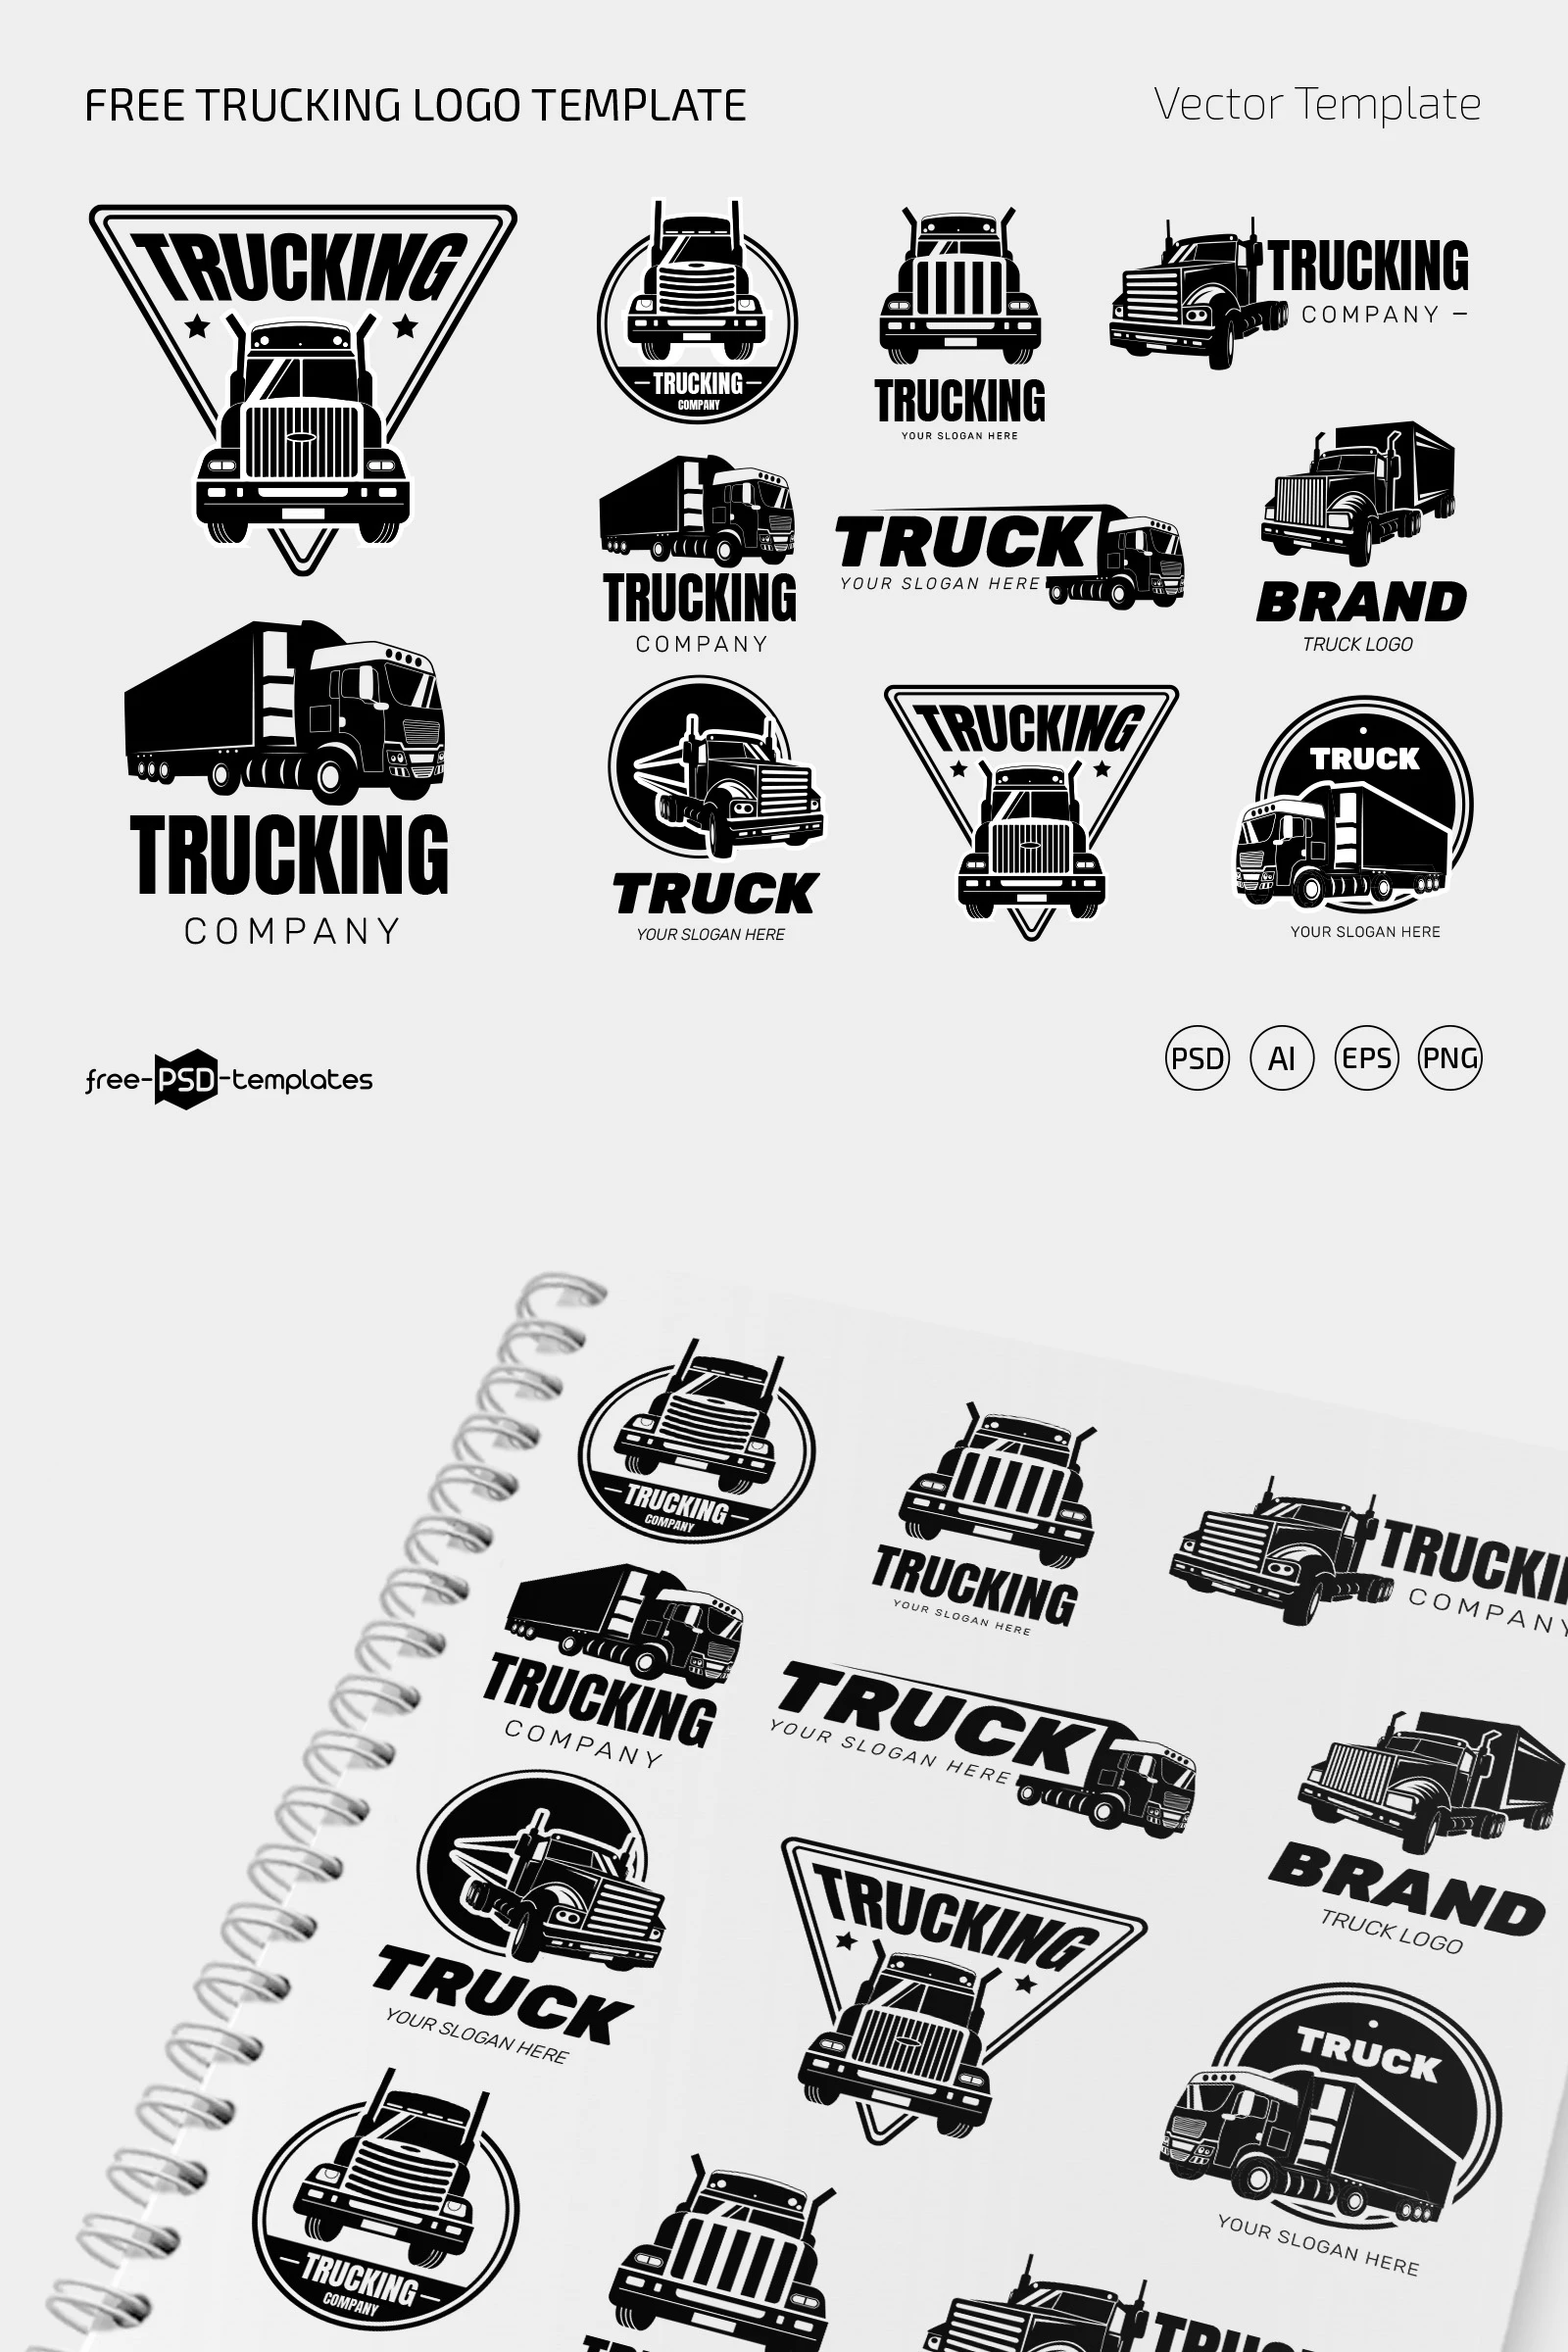 Free Trucking Logo Template